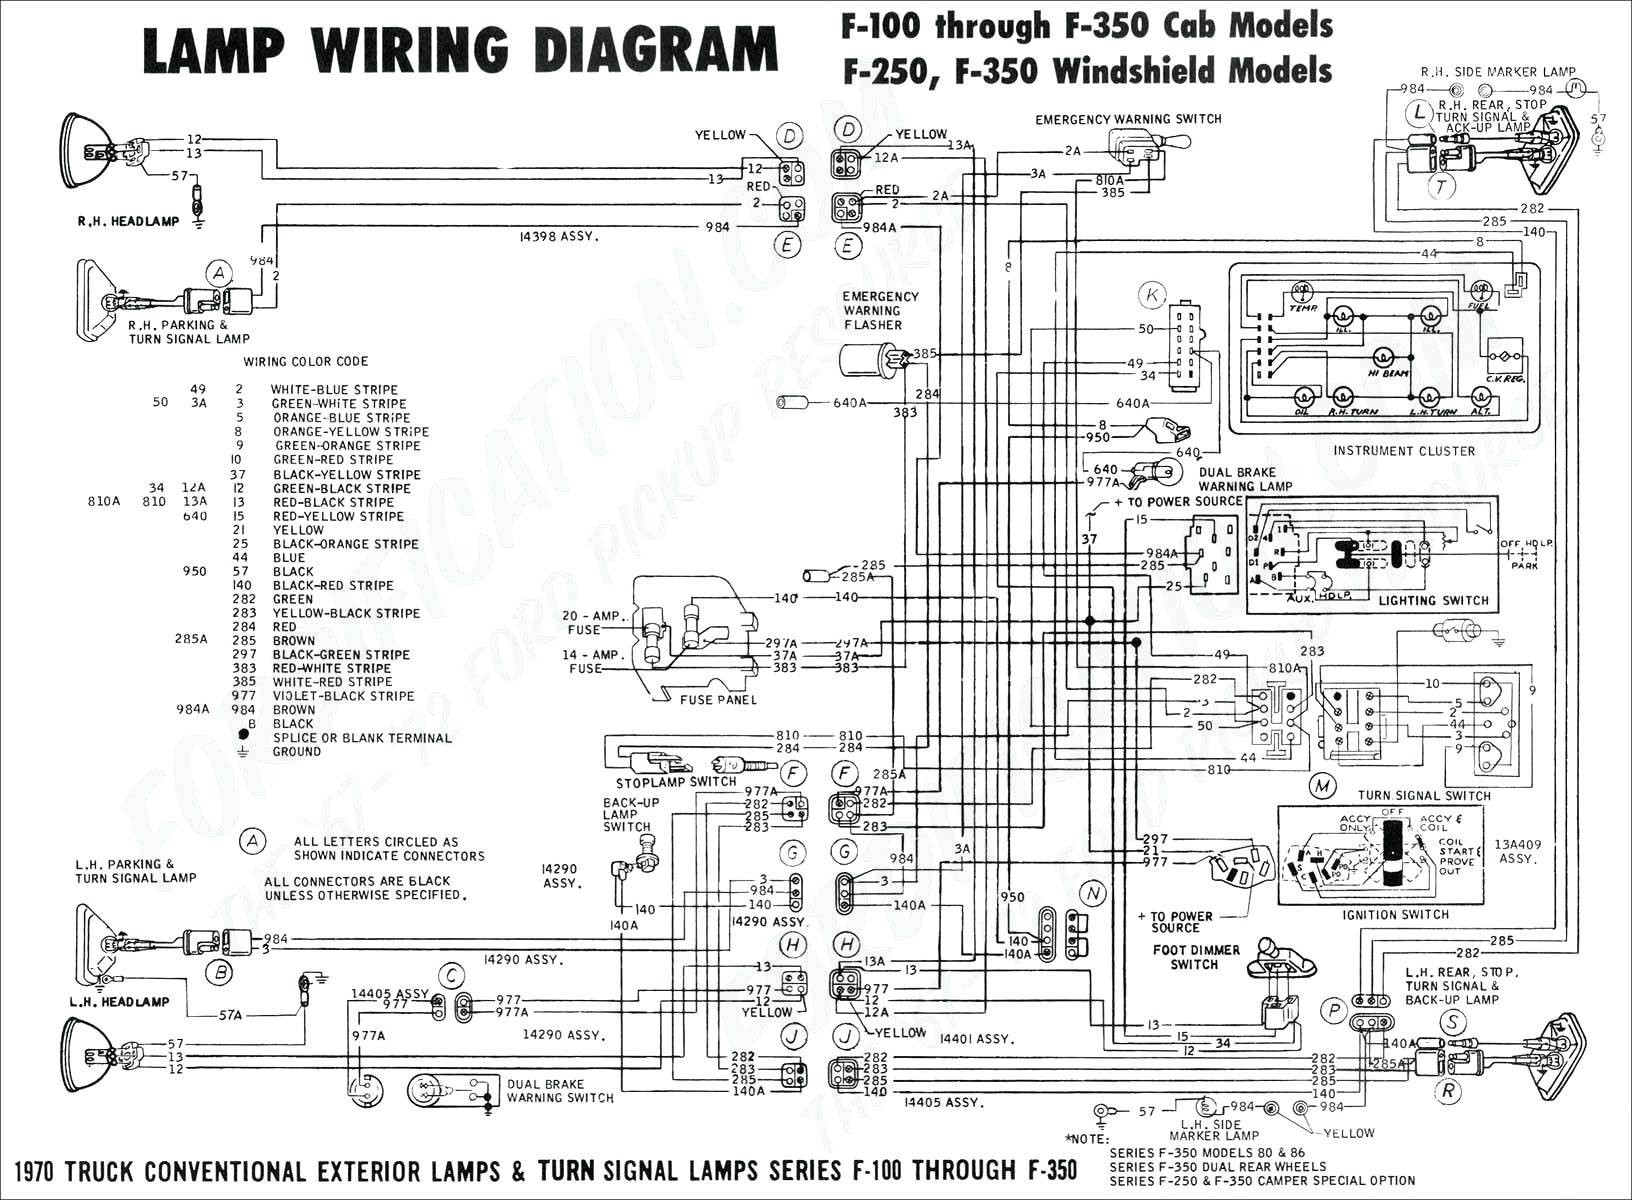 2002 toyota Tacoma Wiring Diagram 2010 toyota Ta A Wiring Diagram Of 2002 toyota Tacoma Wiring Diagram